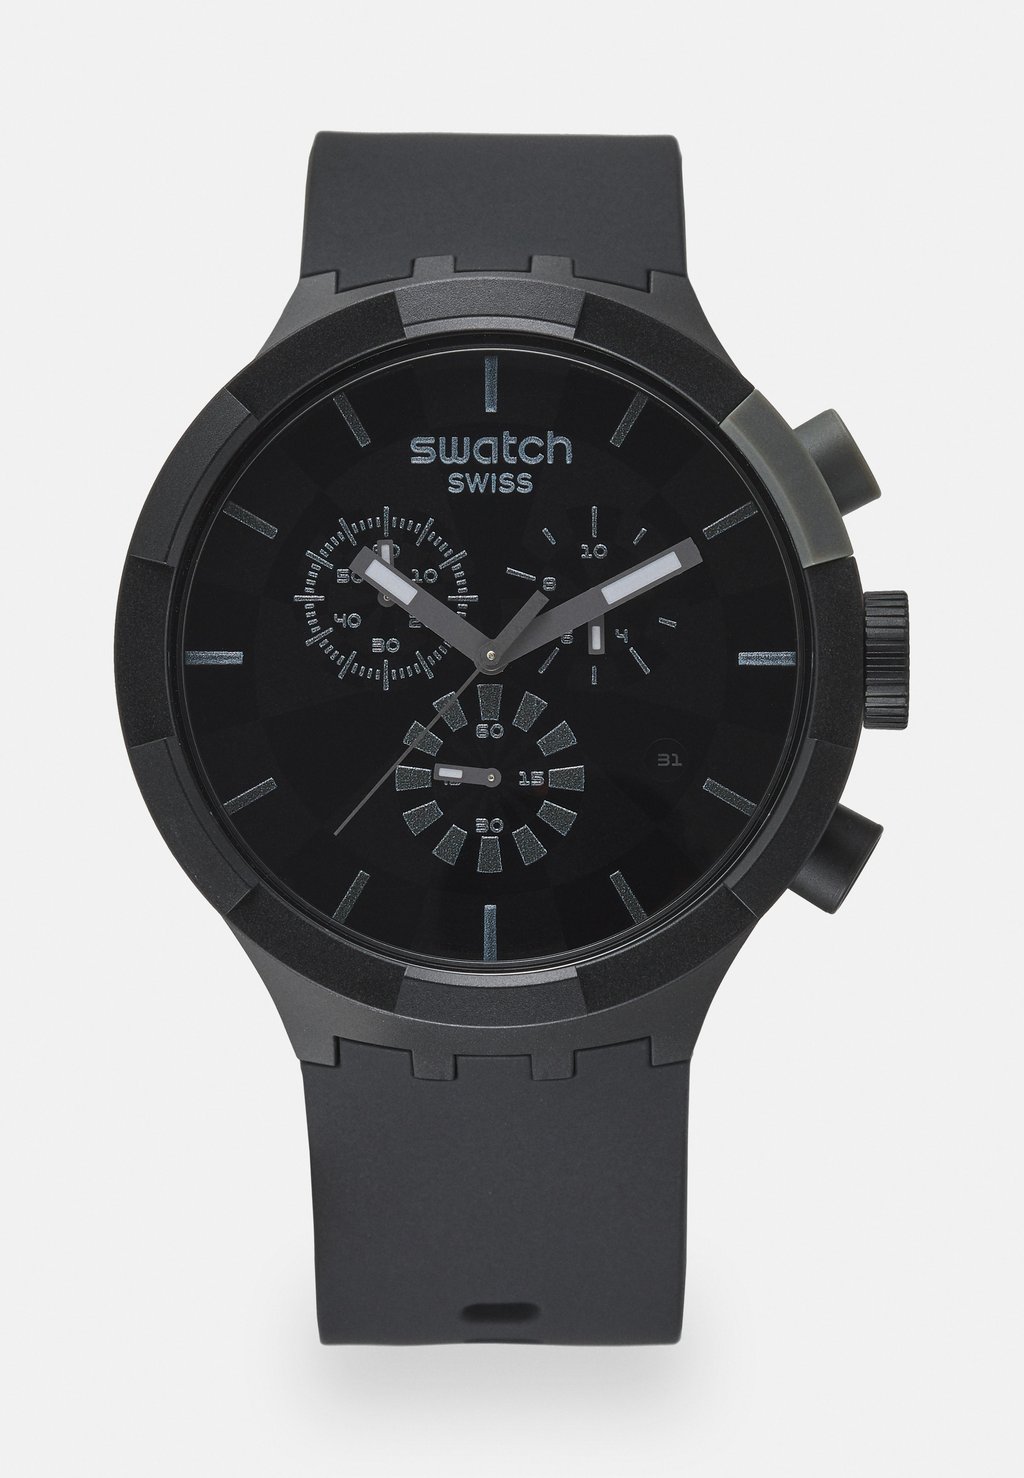 Хронограф RACING PIRATE Swatch, цвет black/grey